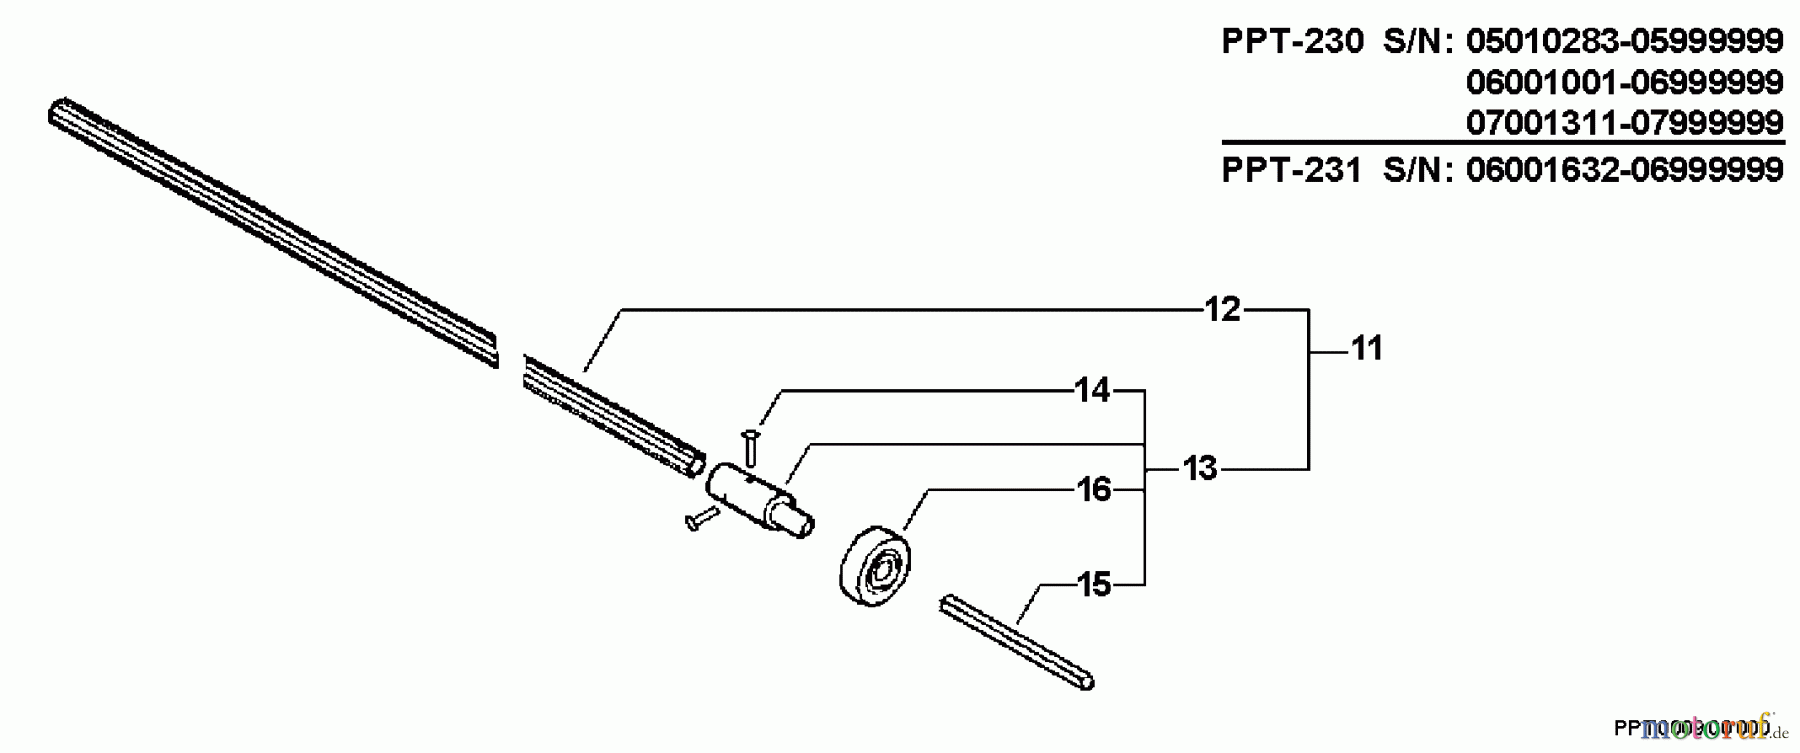  Echo Hochentaster PPT-230 - Echo Pole Saw / Pruner, S/N: 05001001 - 05999999 Driveshaft, Connector  S/N: 05010283 - 05999999